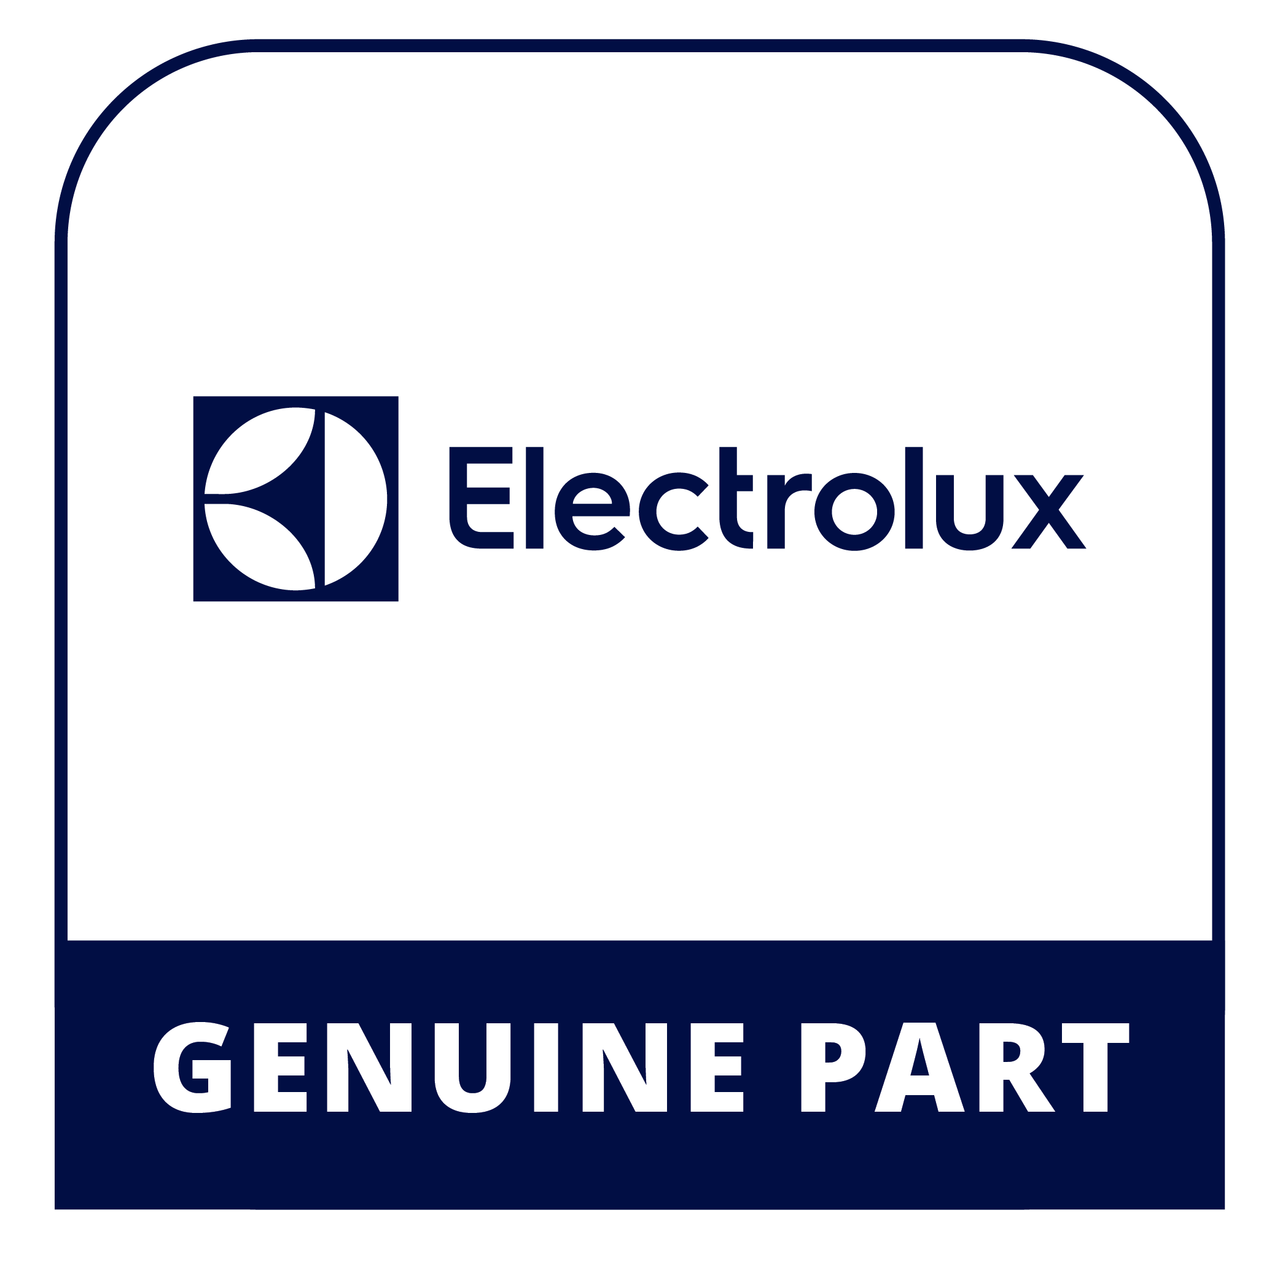 Frigidaire - Electrolux 240311501 - Support-Door Rack - Genuine Electrolux Part